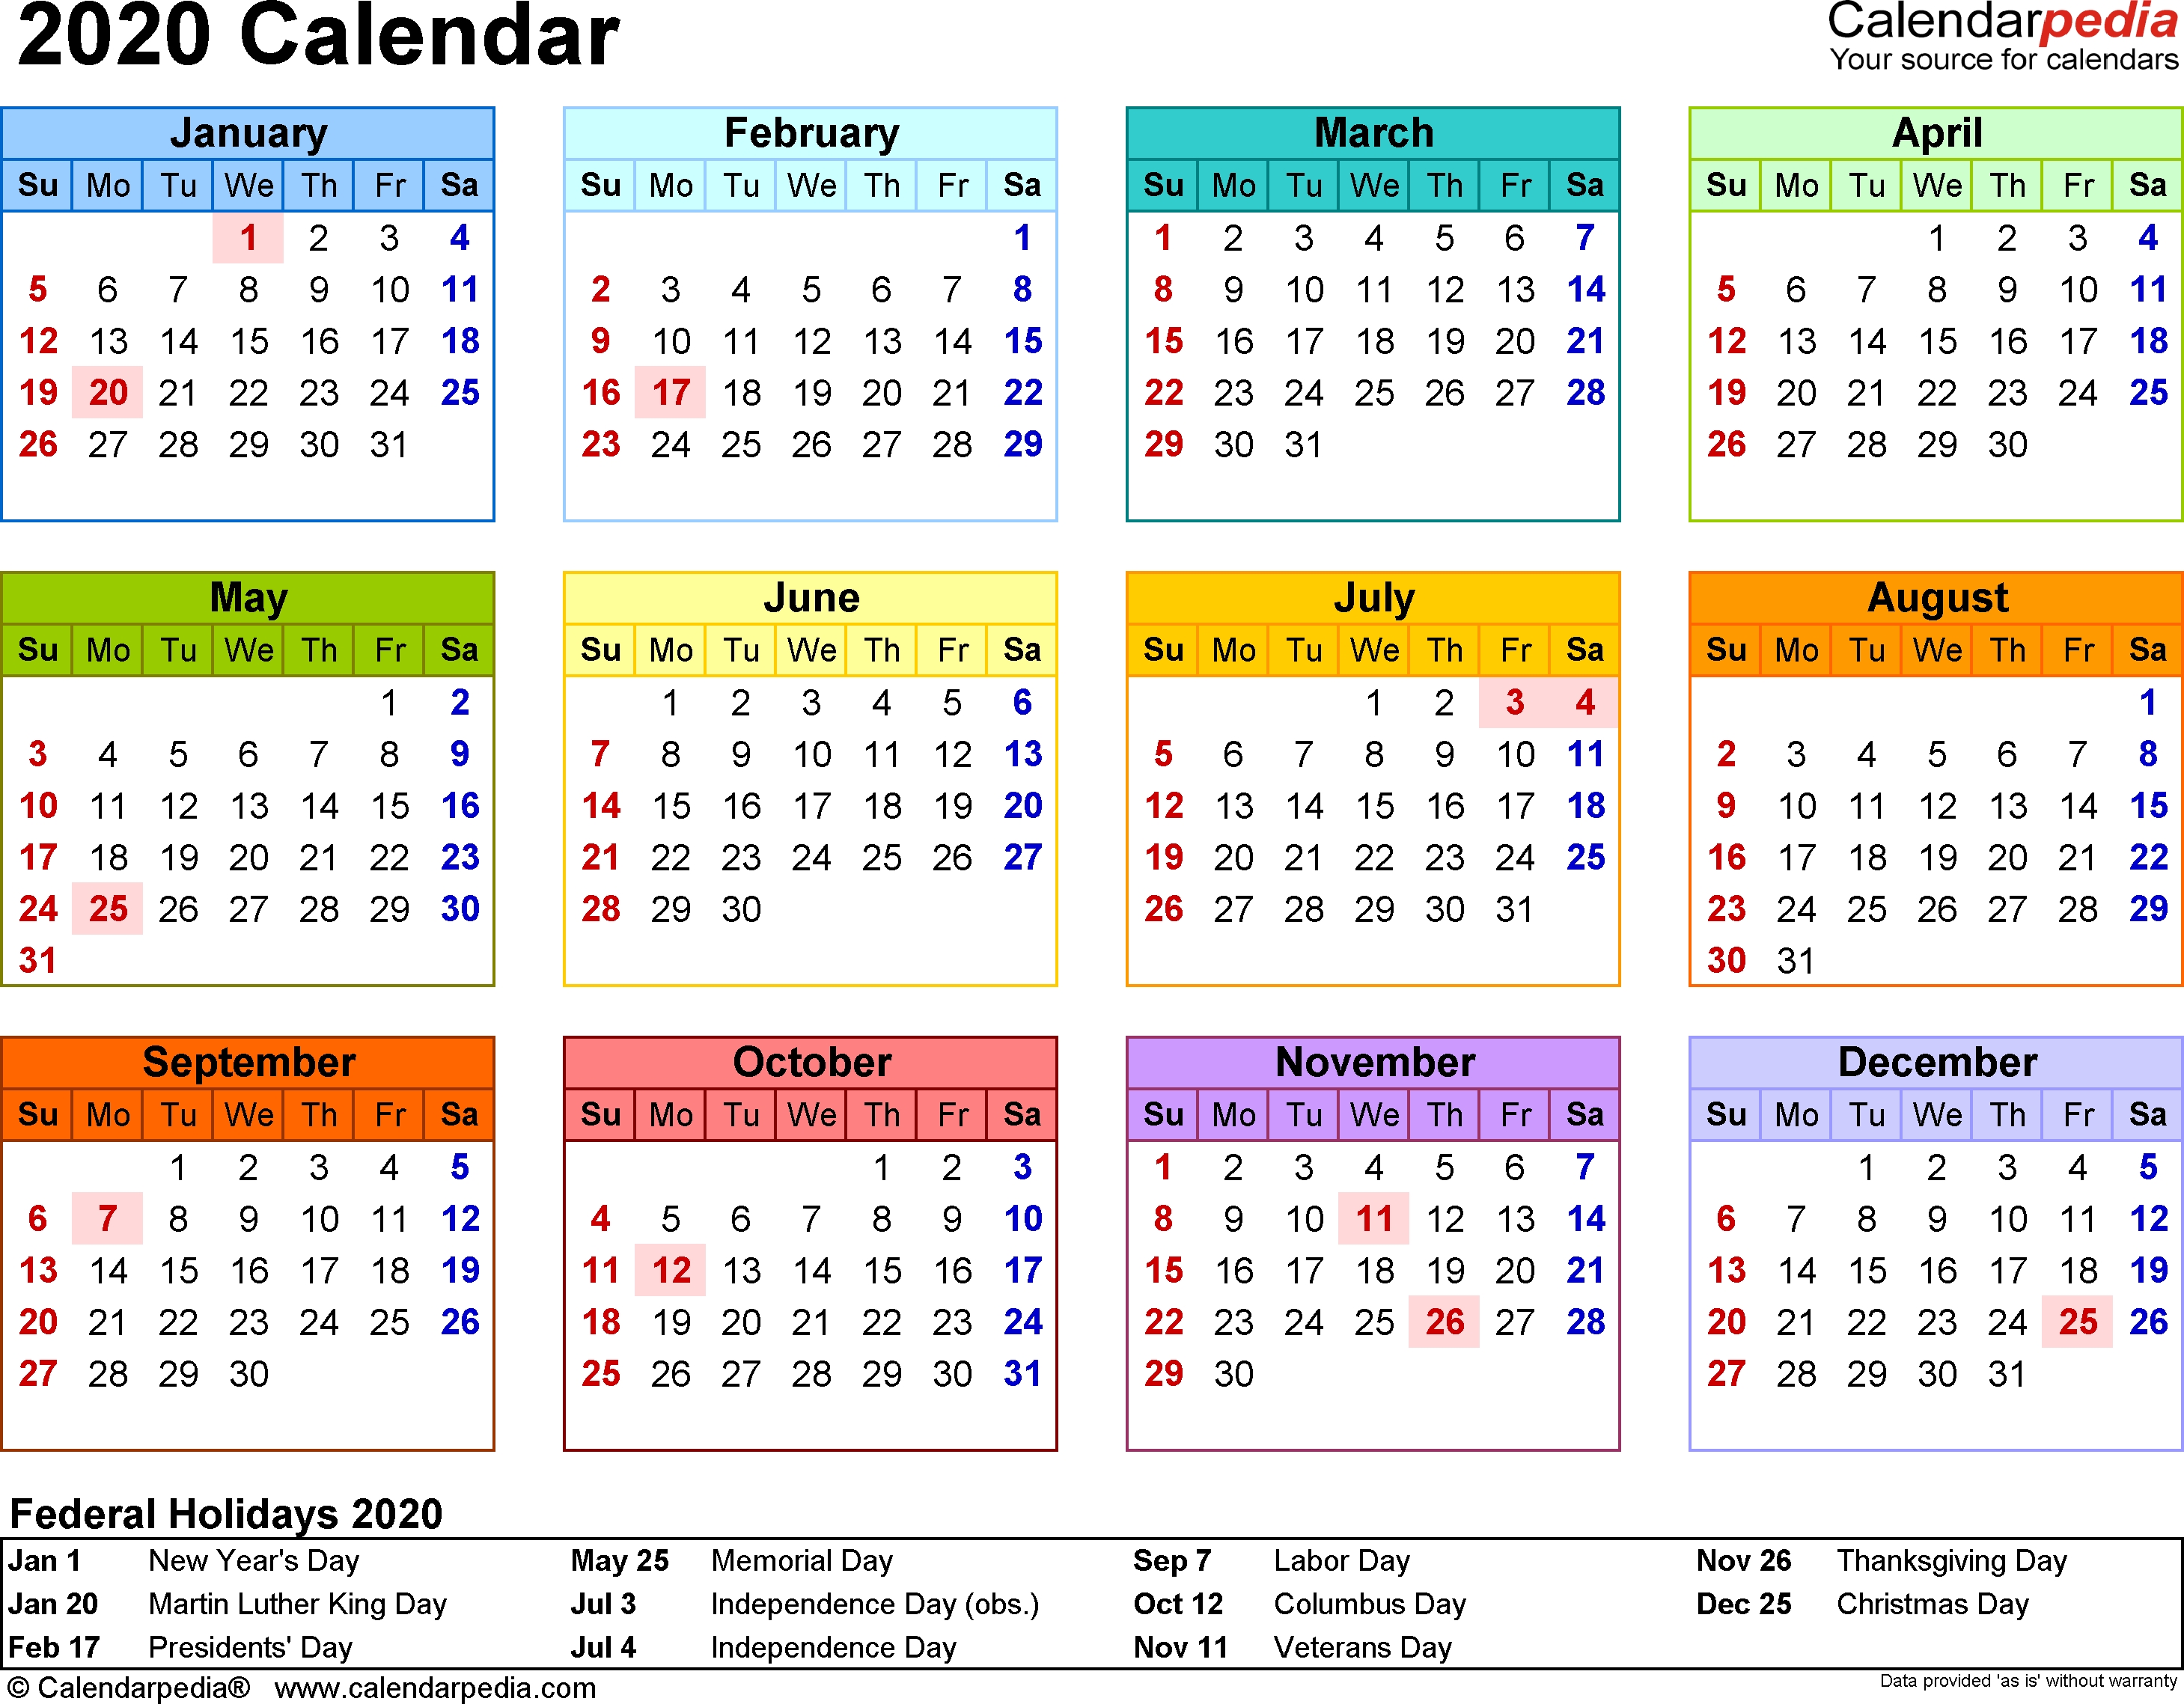 2020 Calendar - Free Printable Microsoft Word Templates Calendarpedia 2020 For South Africa